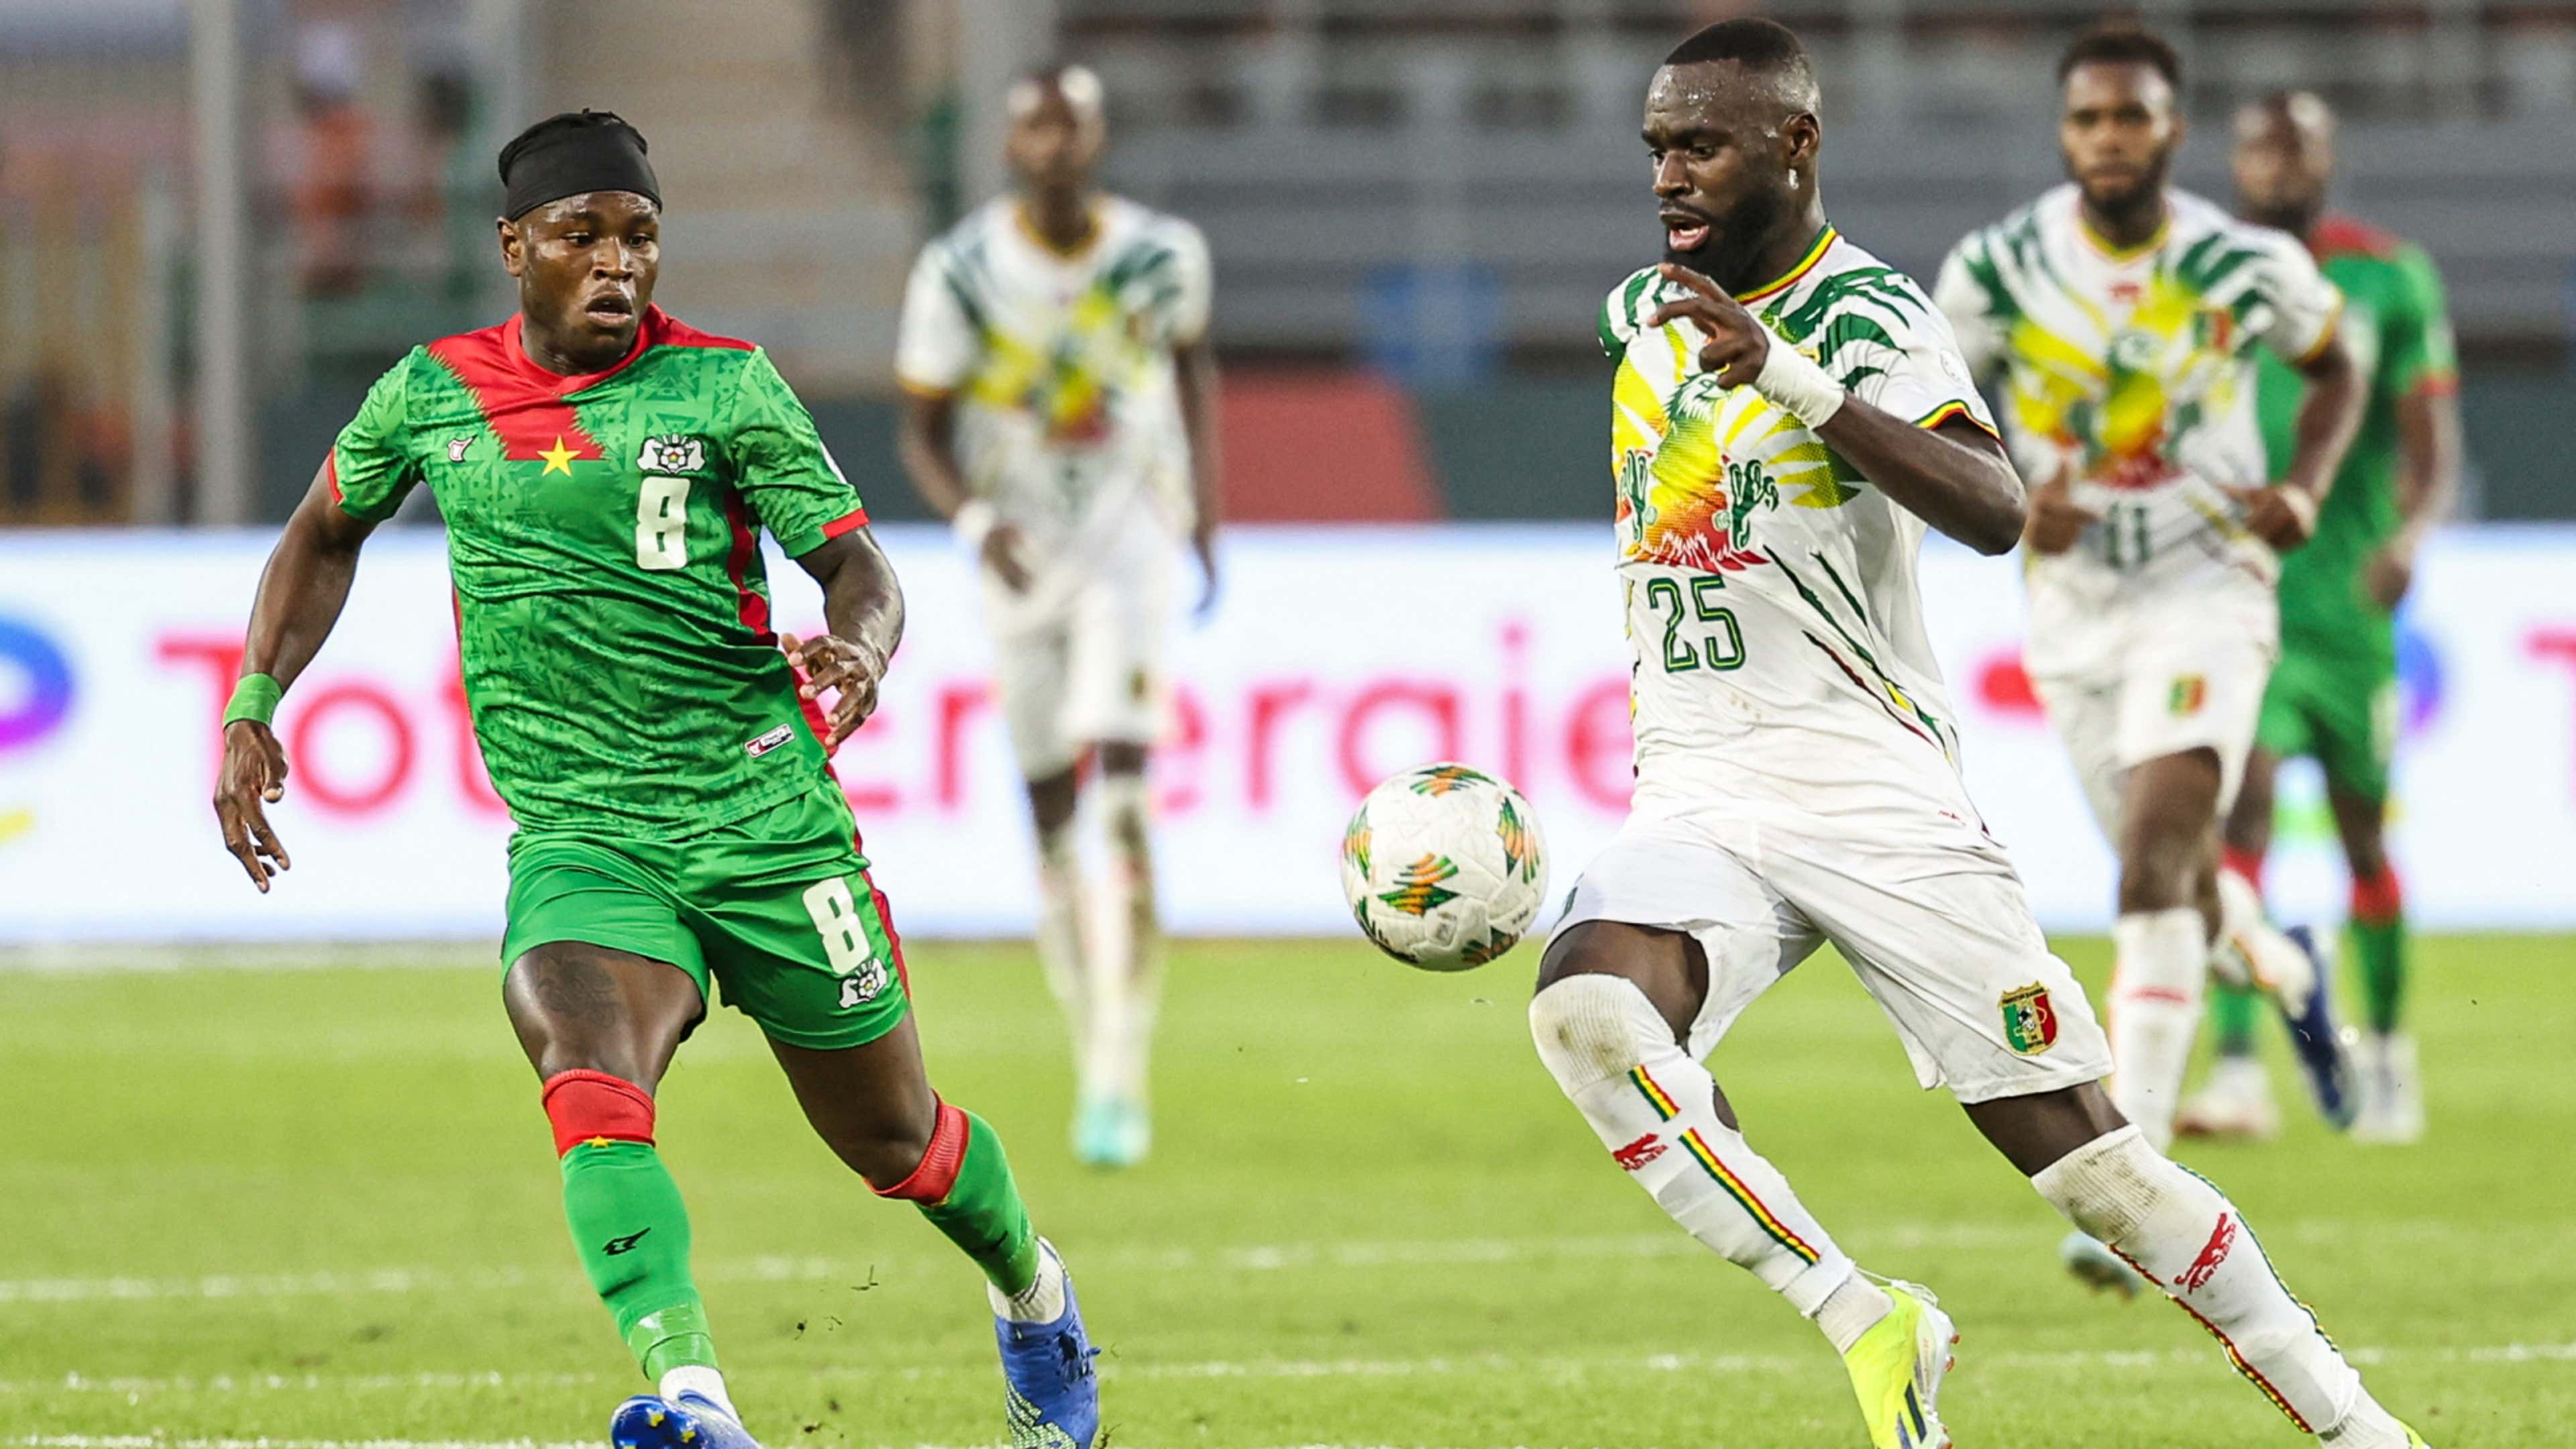 Mali squeeze past Burkina Faso to set up quarter-final date | firstclasssoccer